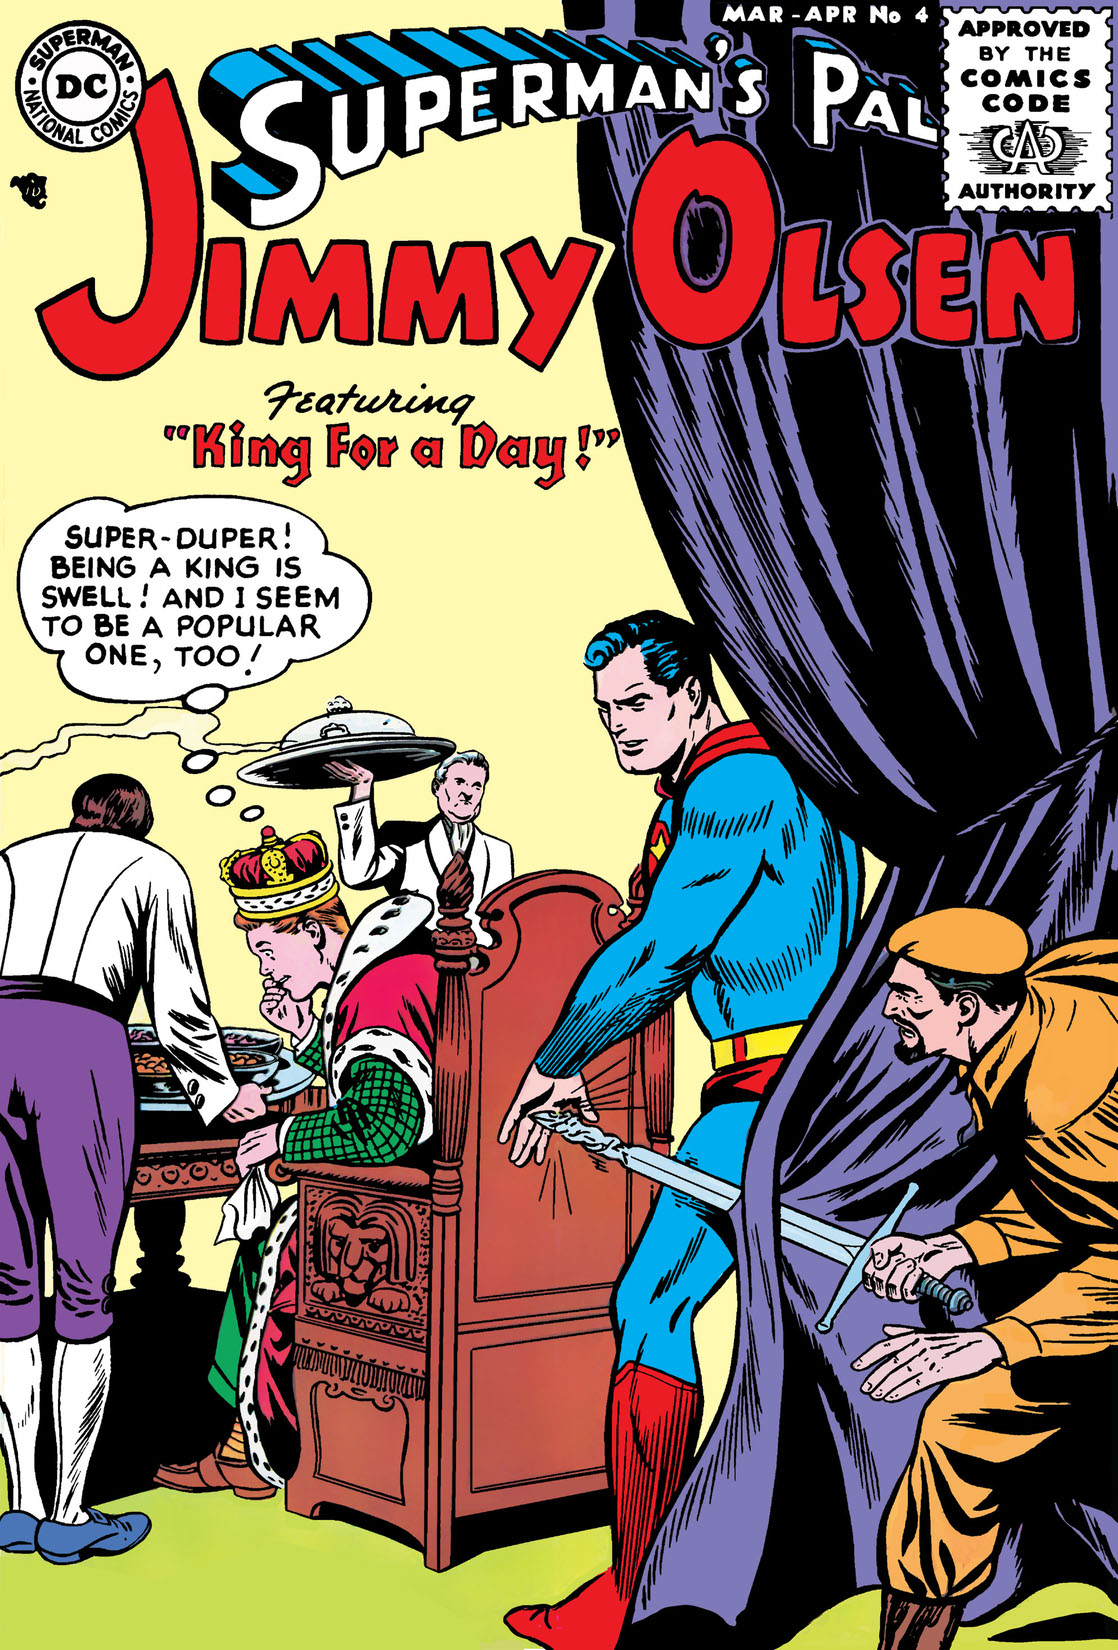 Superman's Pal, Jimmy Olsen #4 preview images